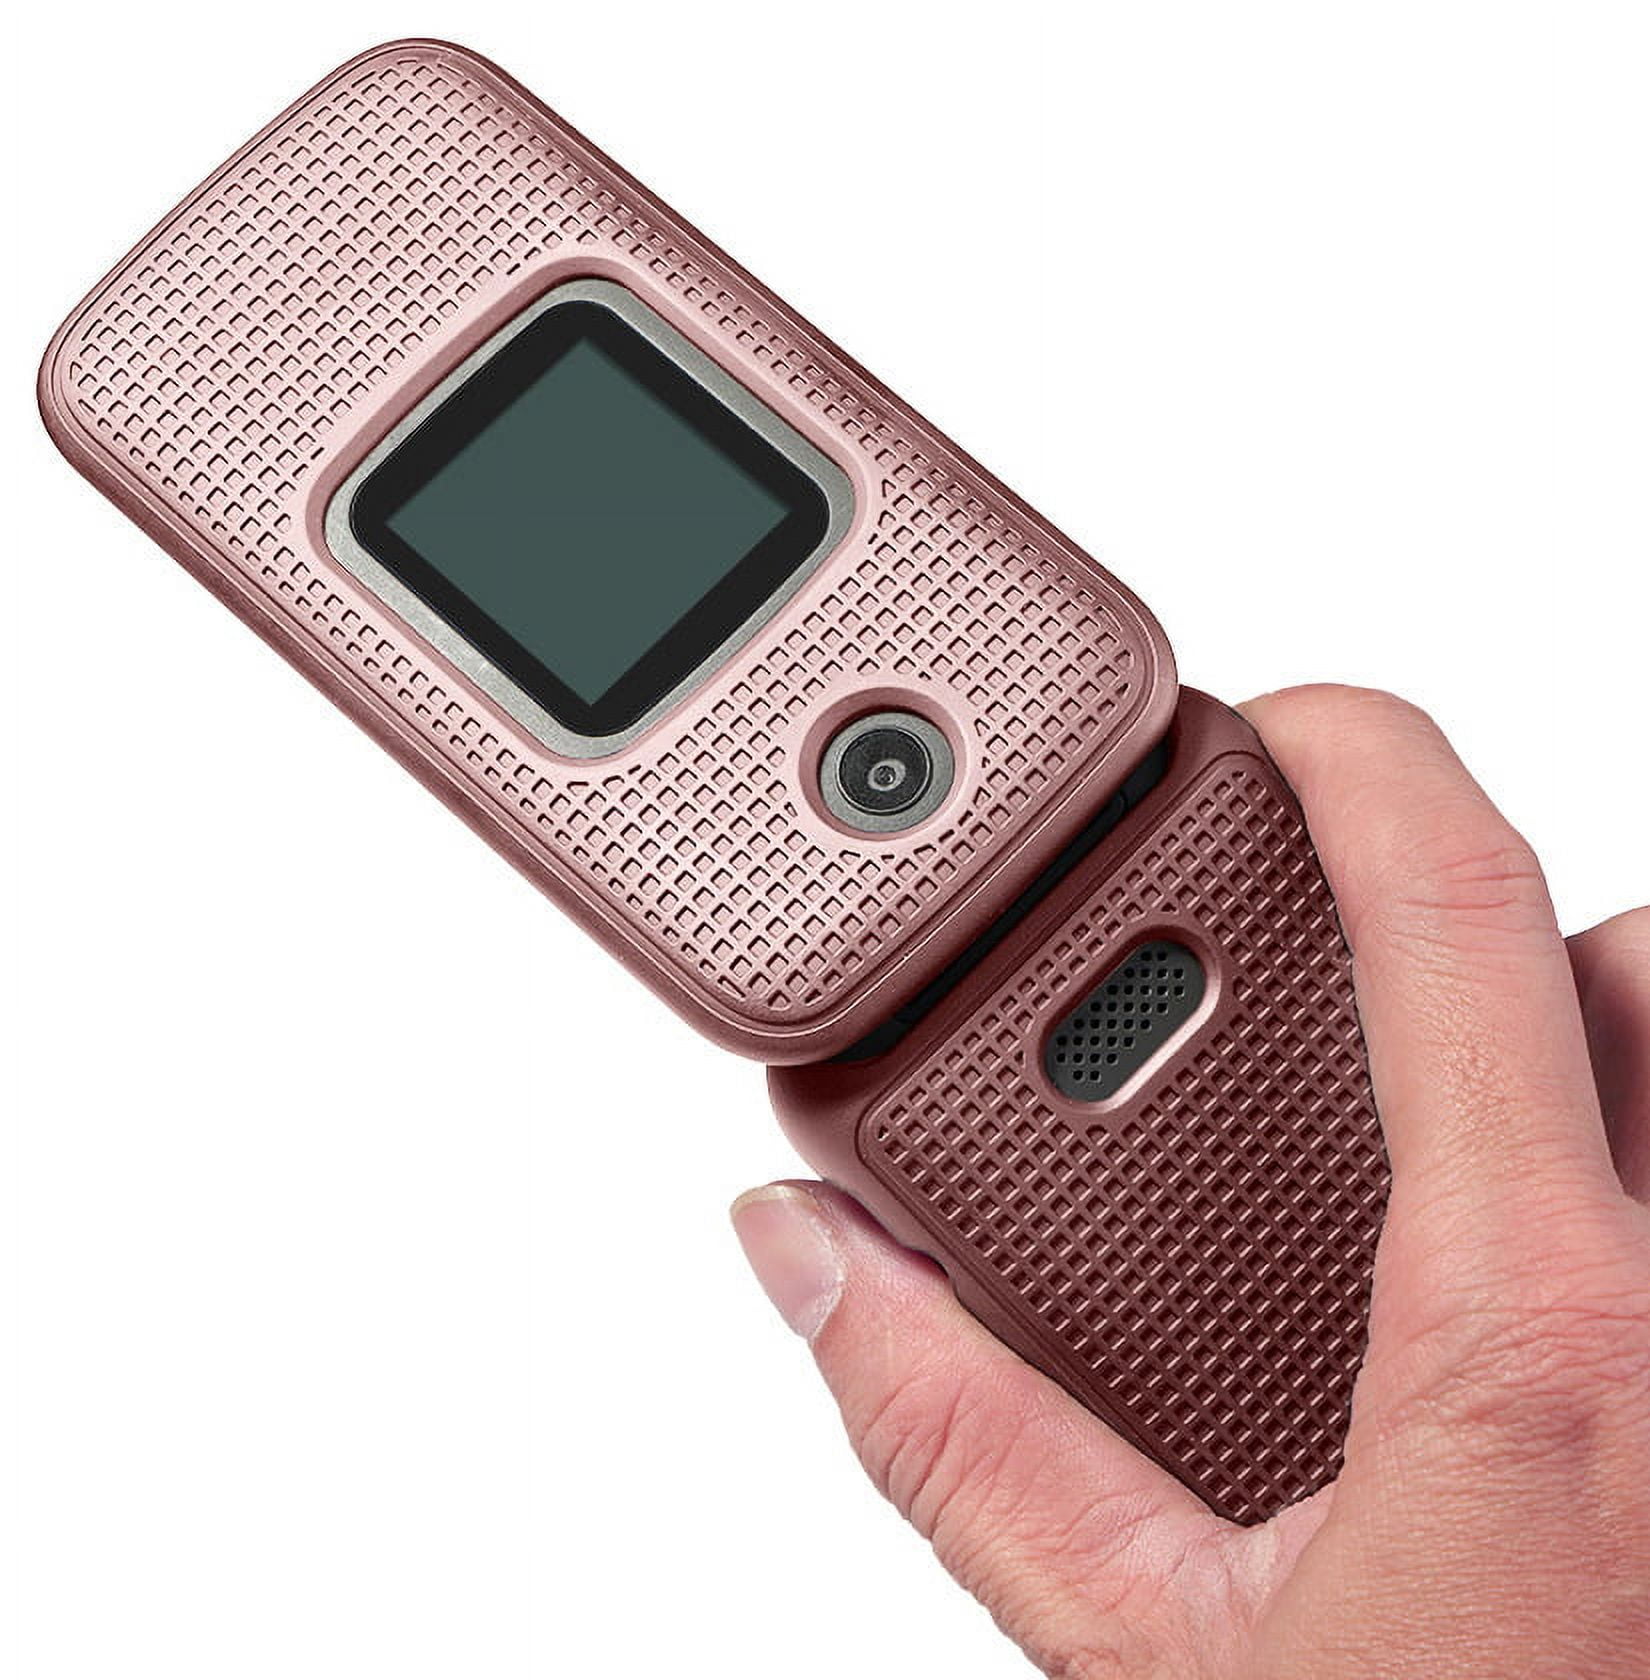 Case for Alcatel Smartflip / Go Flip 3, Nakedcellphone [Rose Gold Pink]  Protective Snap-On Cover [Grid Texture] for Alcatel Go Flip 3, Alcatel  Smartflip Phone (2019) 4052R/4052C/4052W 